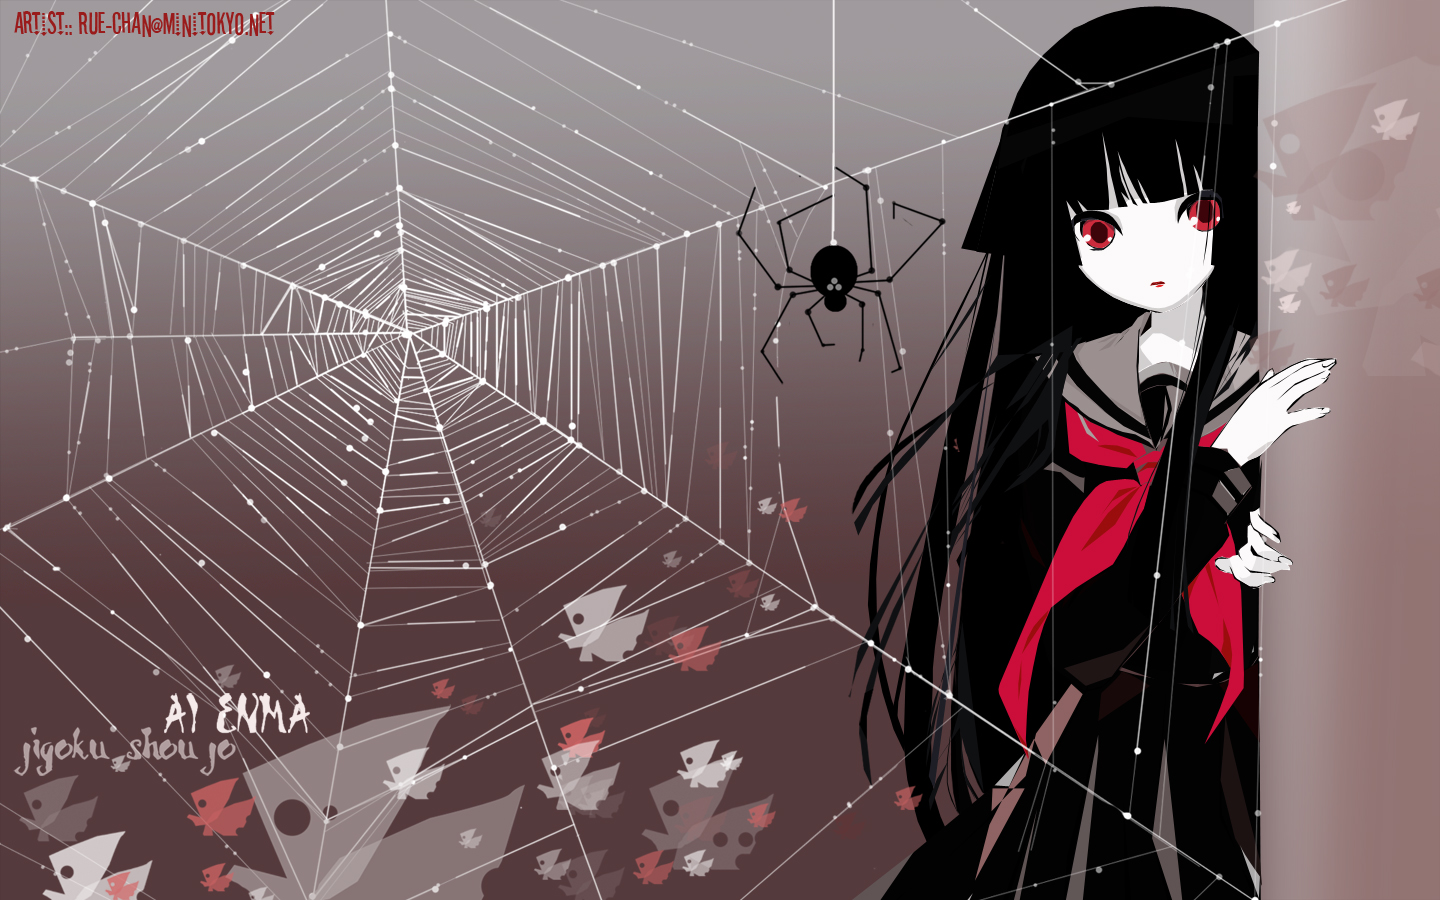 liebe tapete,anime,spinnennetz,karikatur,schwarzes haar,illustration